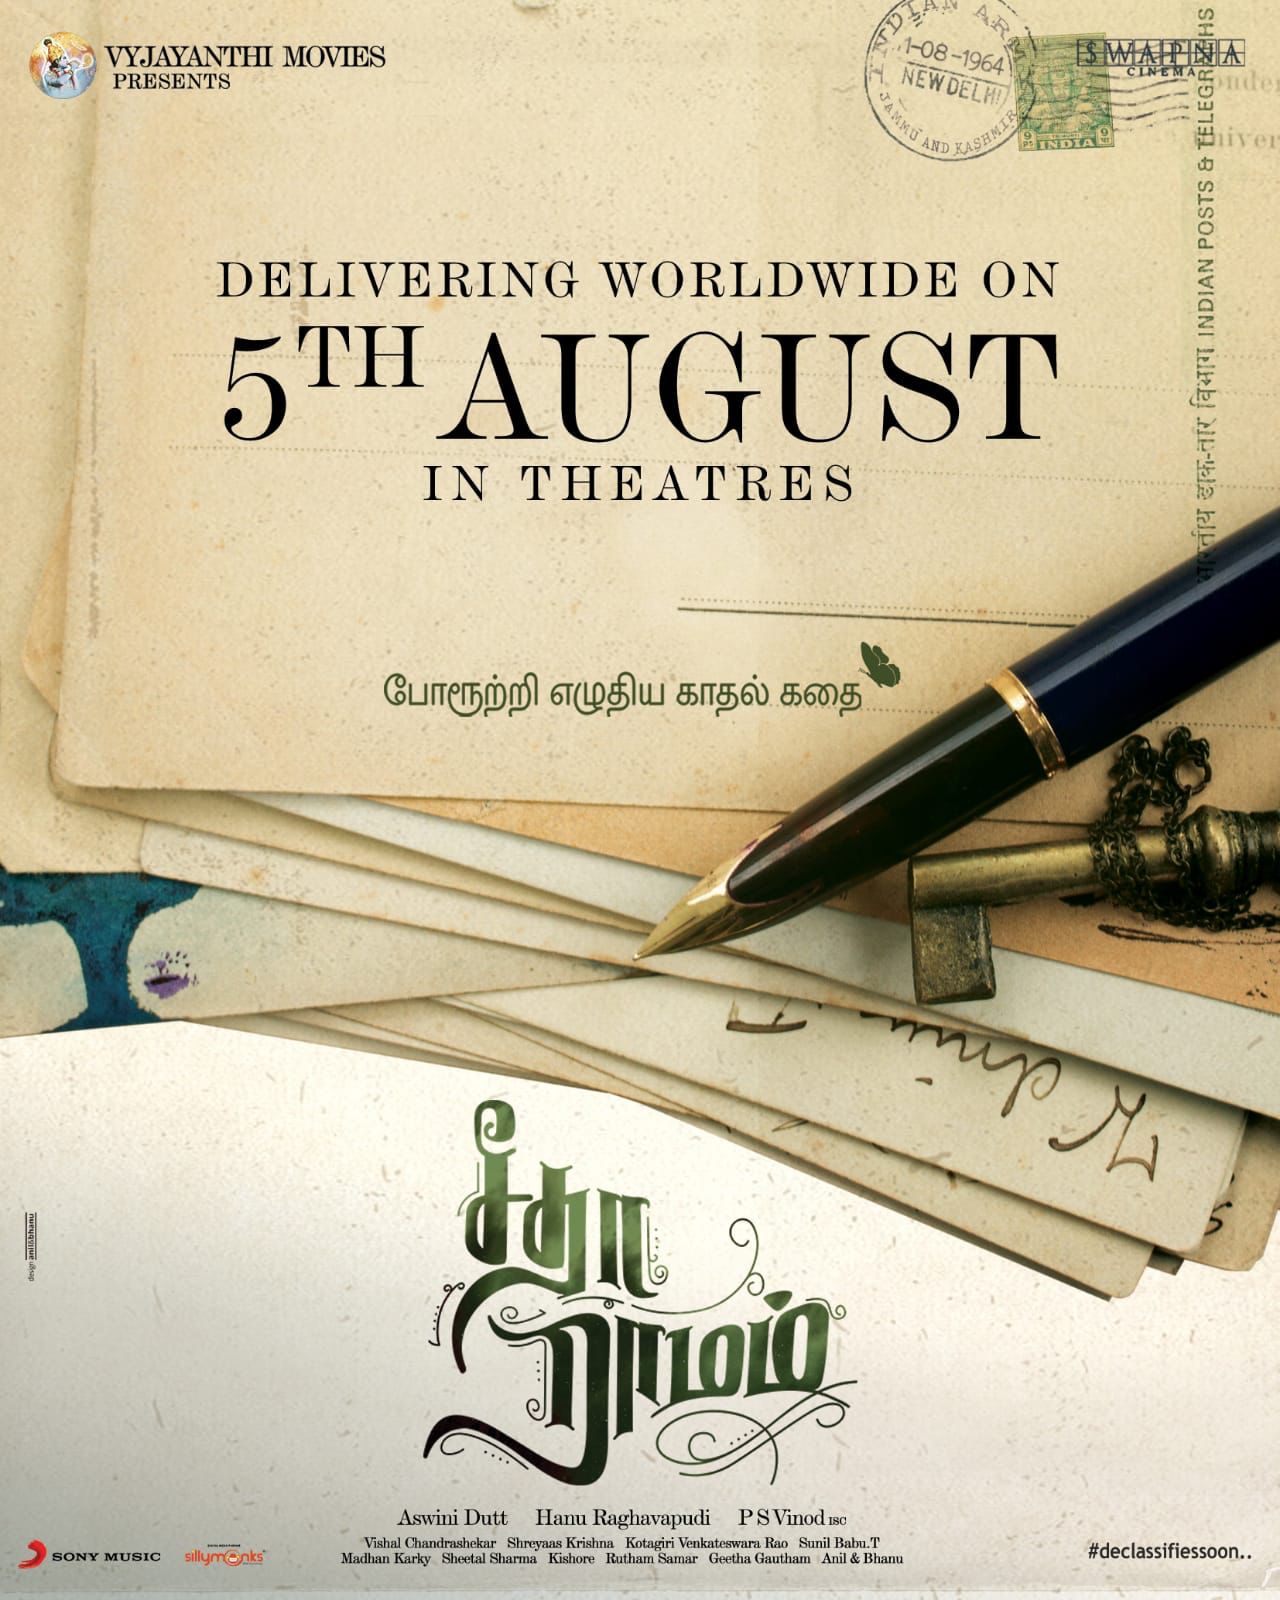 Dulquer Salmaan Rashmika Mandanna Sita Ramam is Releasing Worldwide In Theatres On 5th August